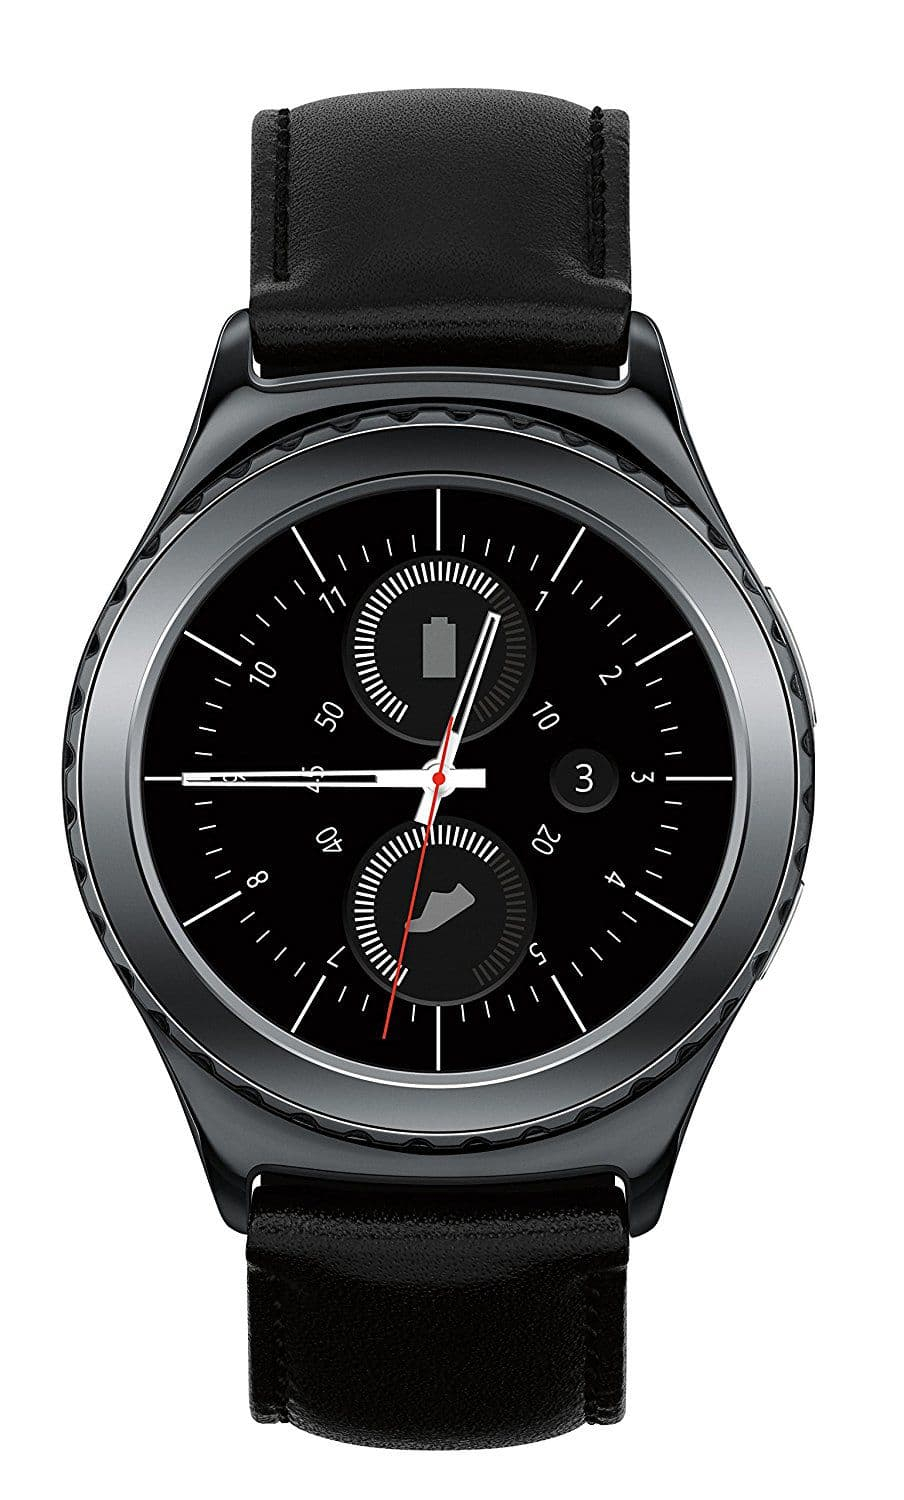 Samsung Gear S2 Classic 3G Black Buy Smartwatch, Compare destiné Samsung Gear S2